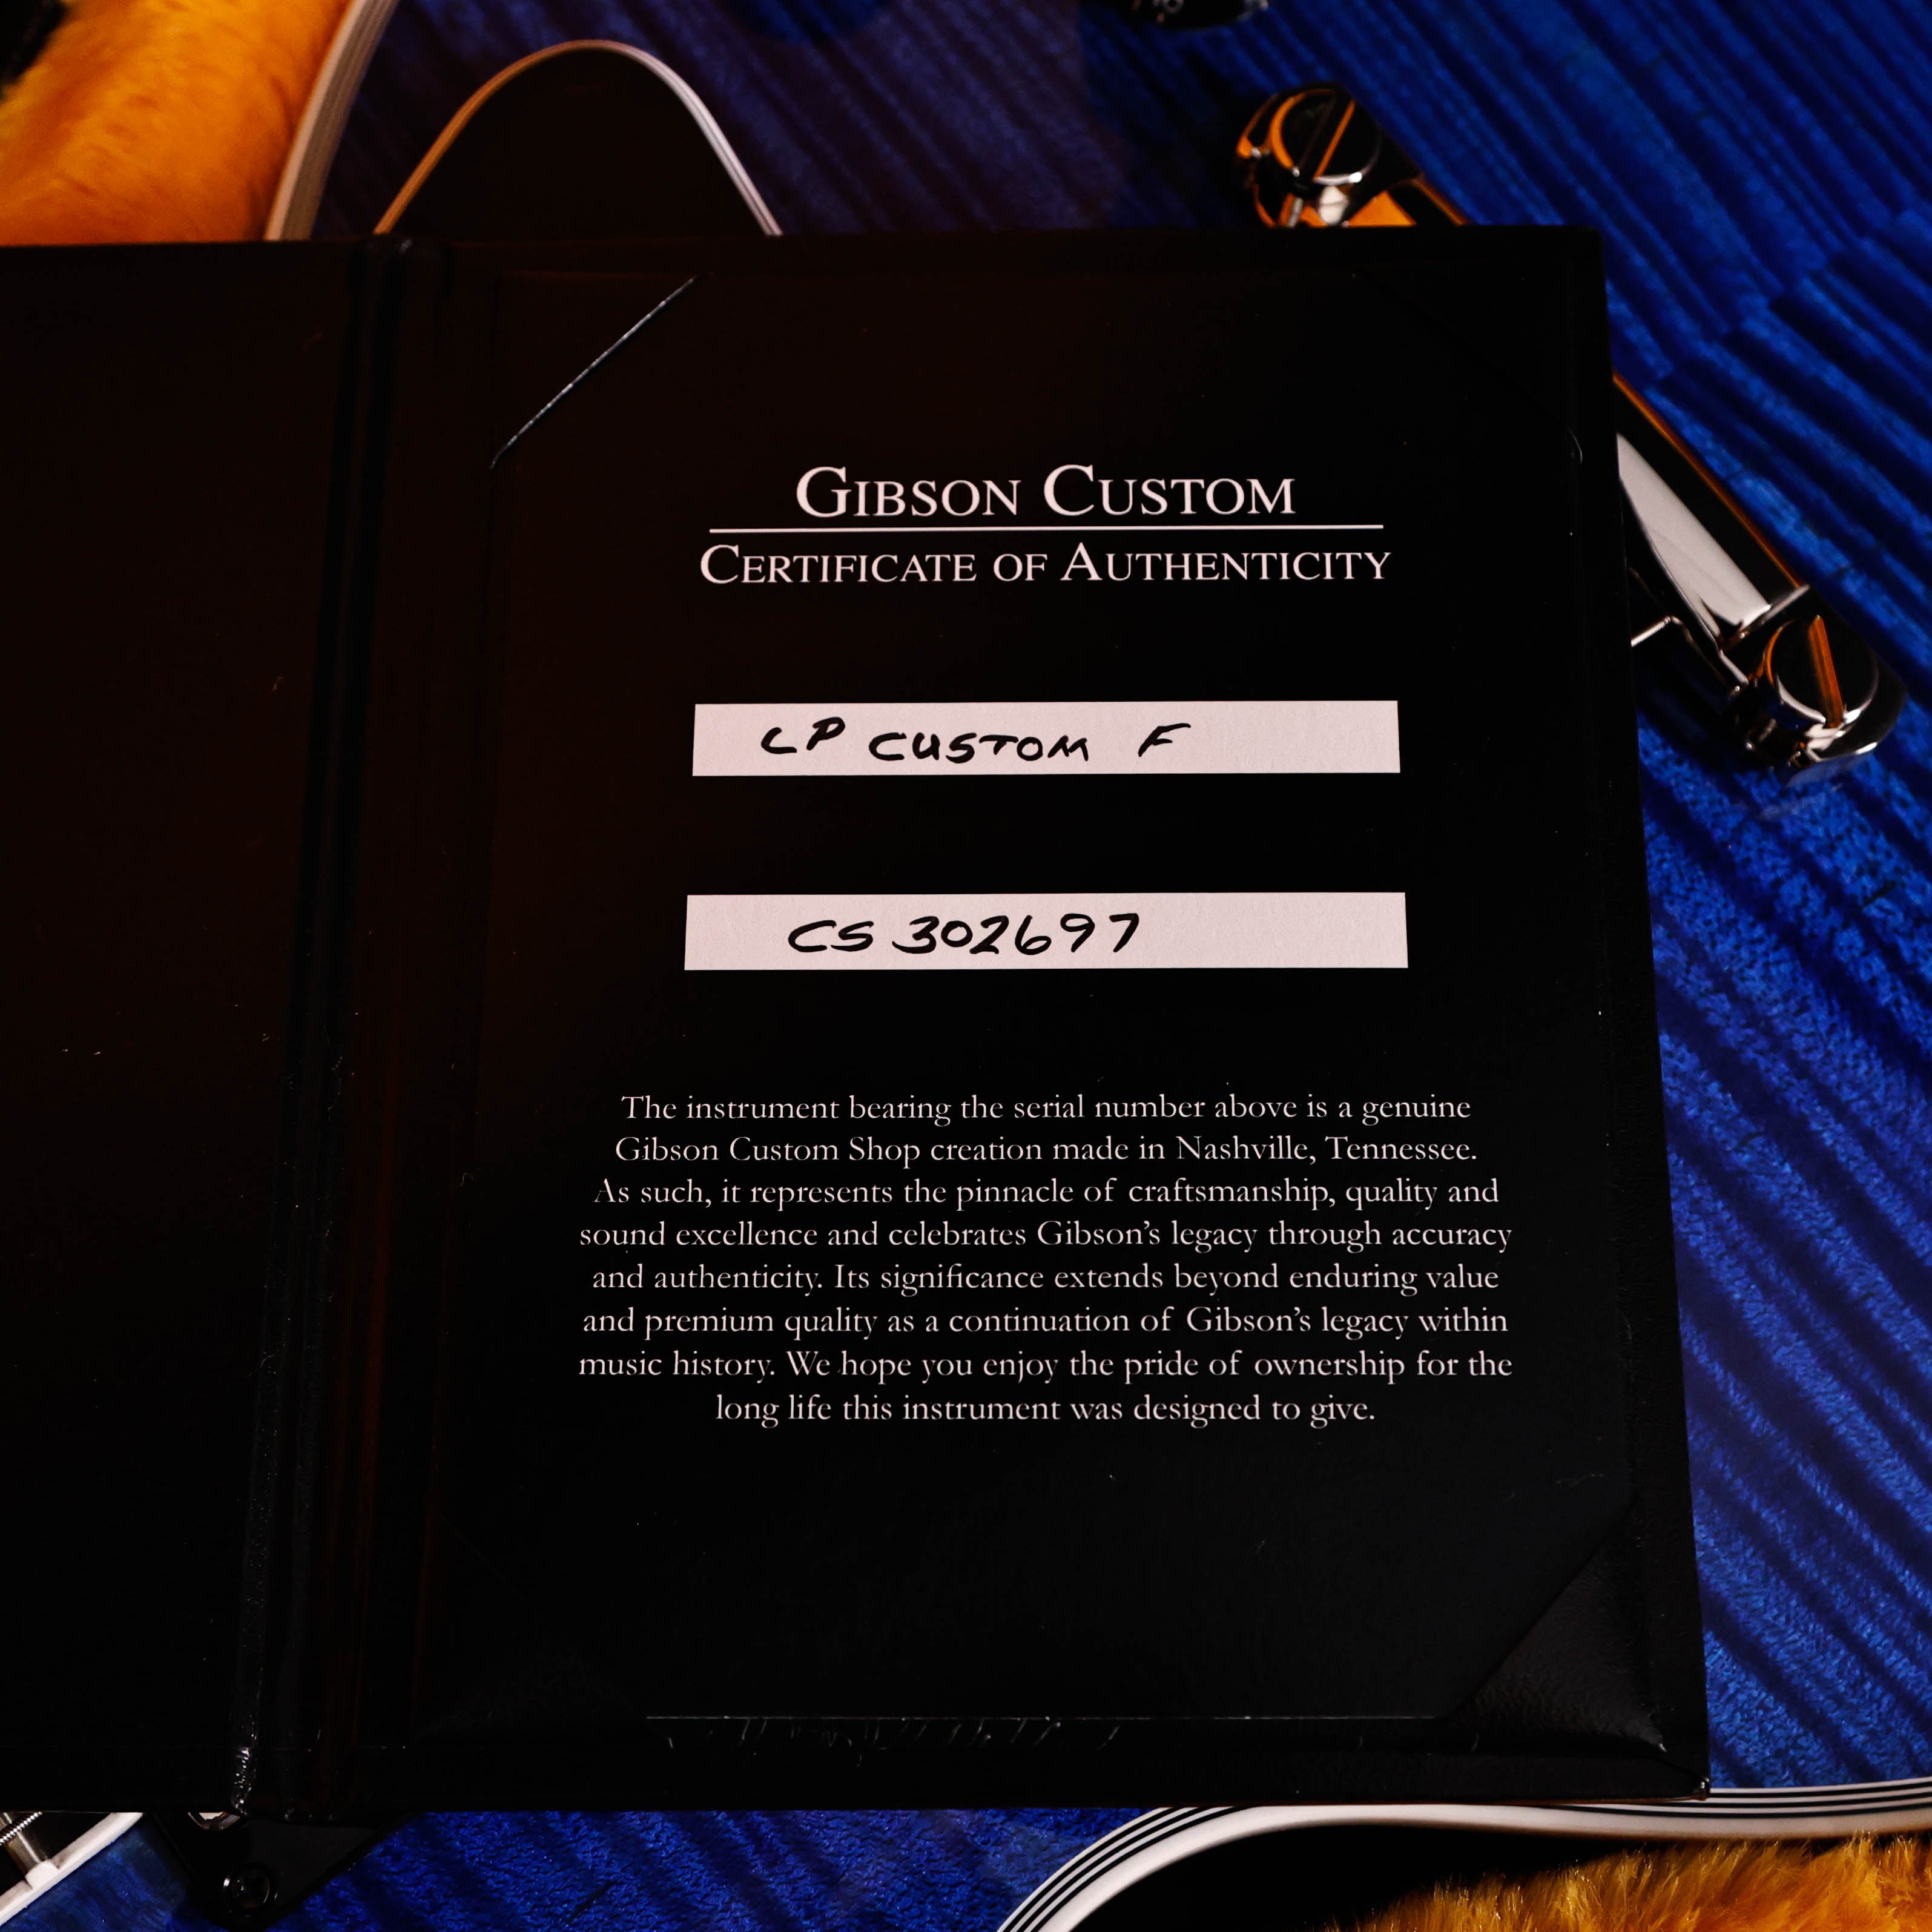 Gibson Les Paul Custom Figured, HAND SELECTED TOP Translucent Blue Gloss, Nickel Hw